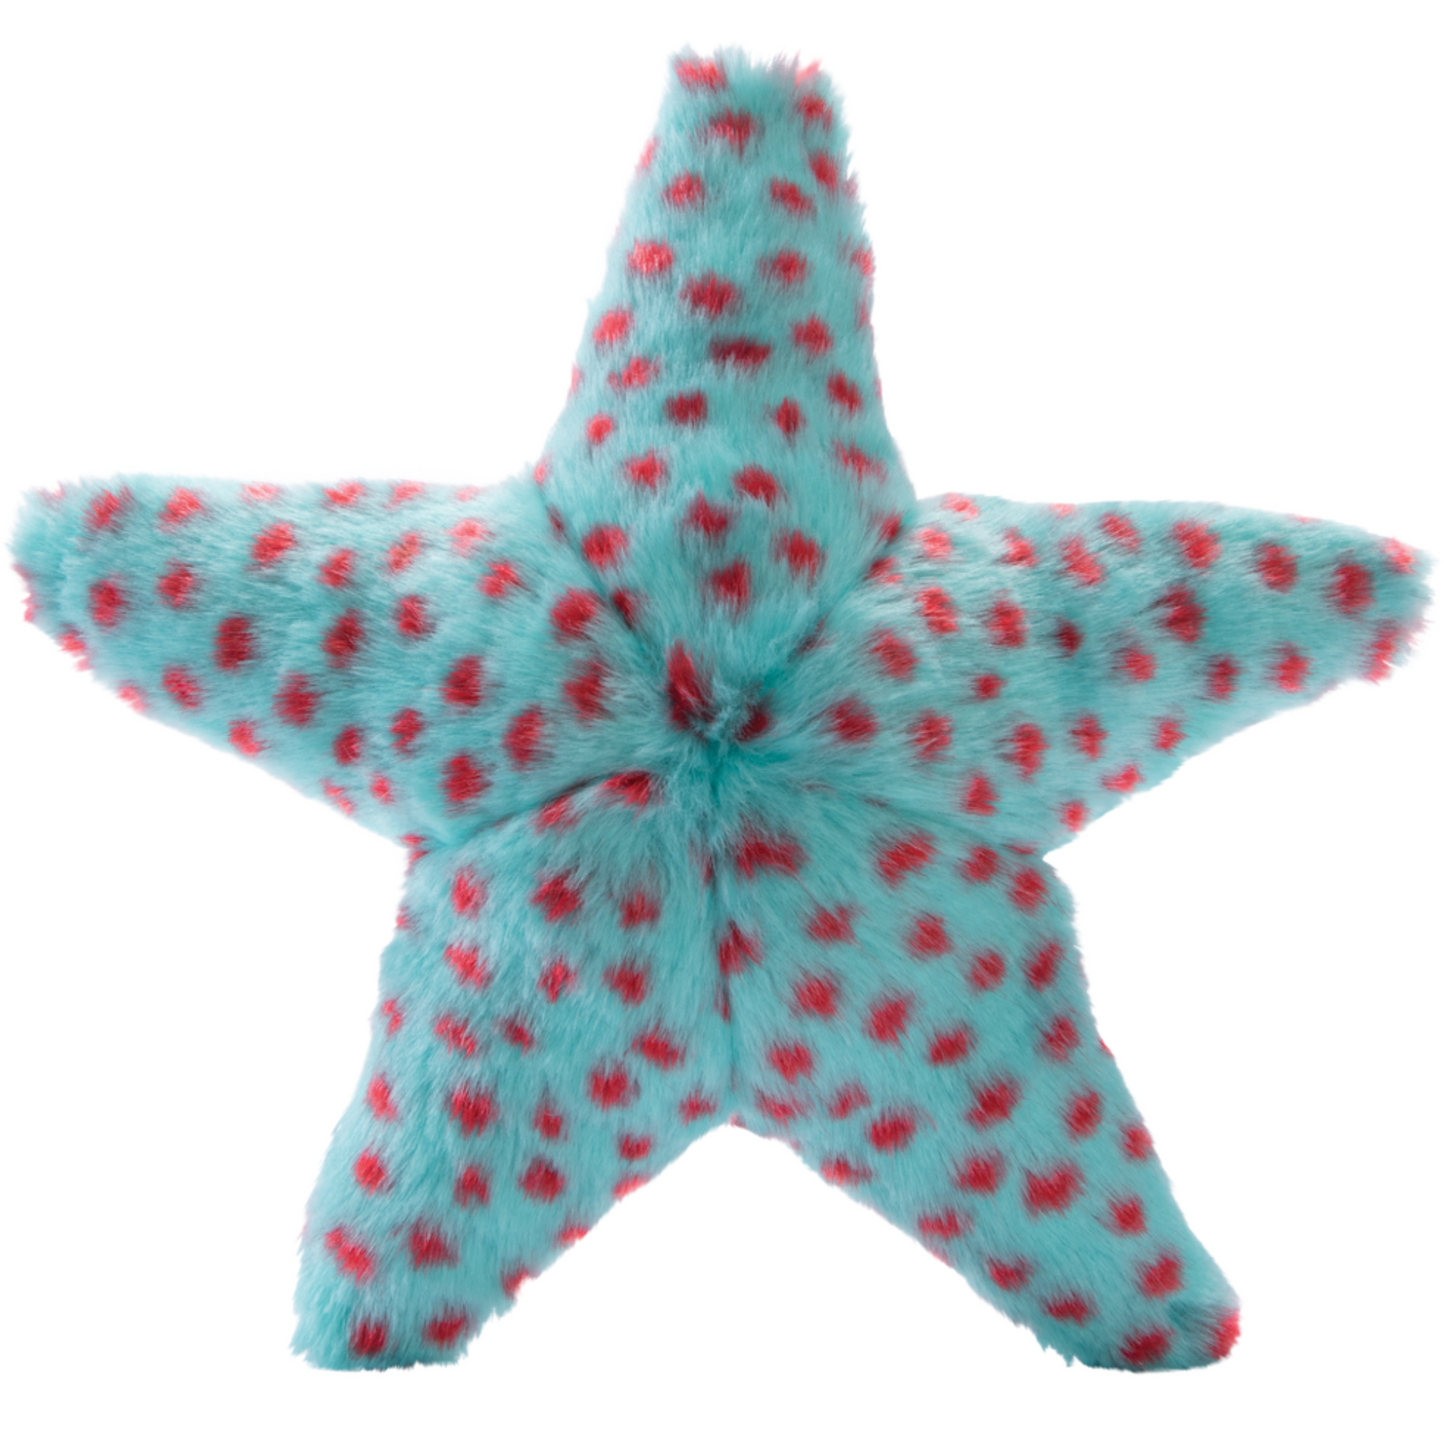 Ally Starfish - Small